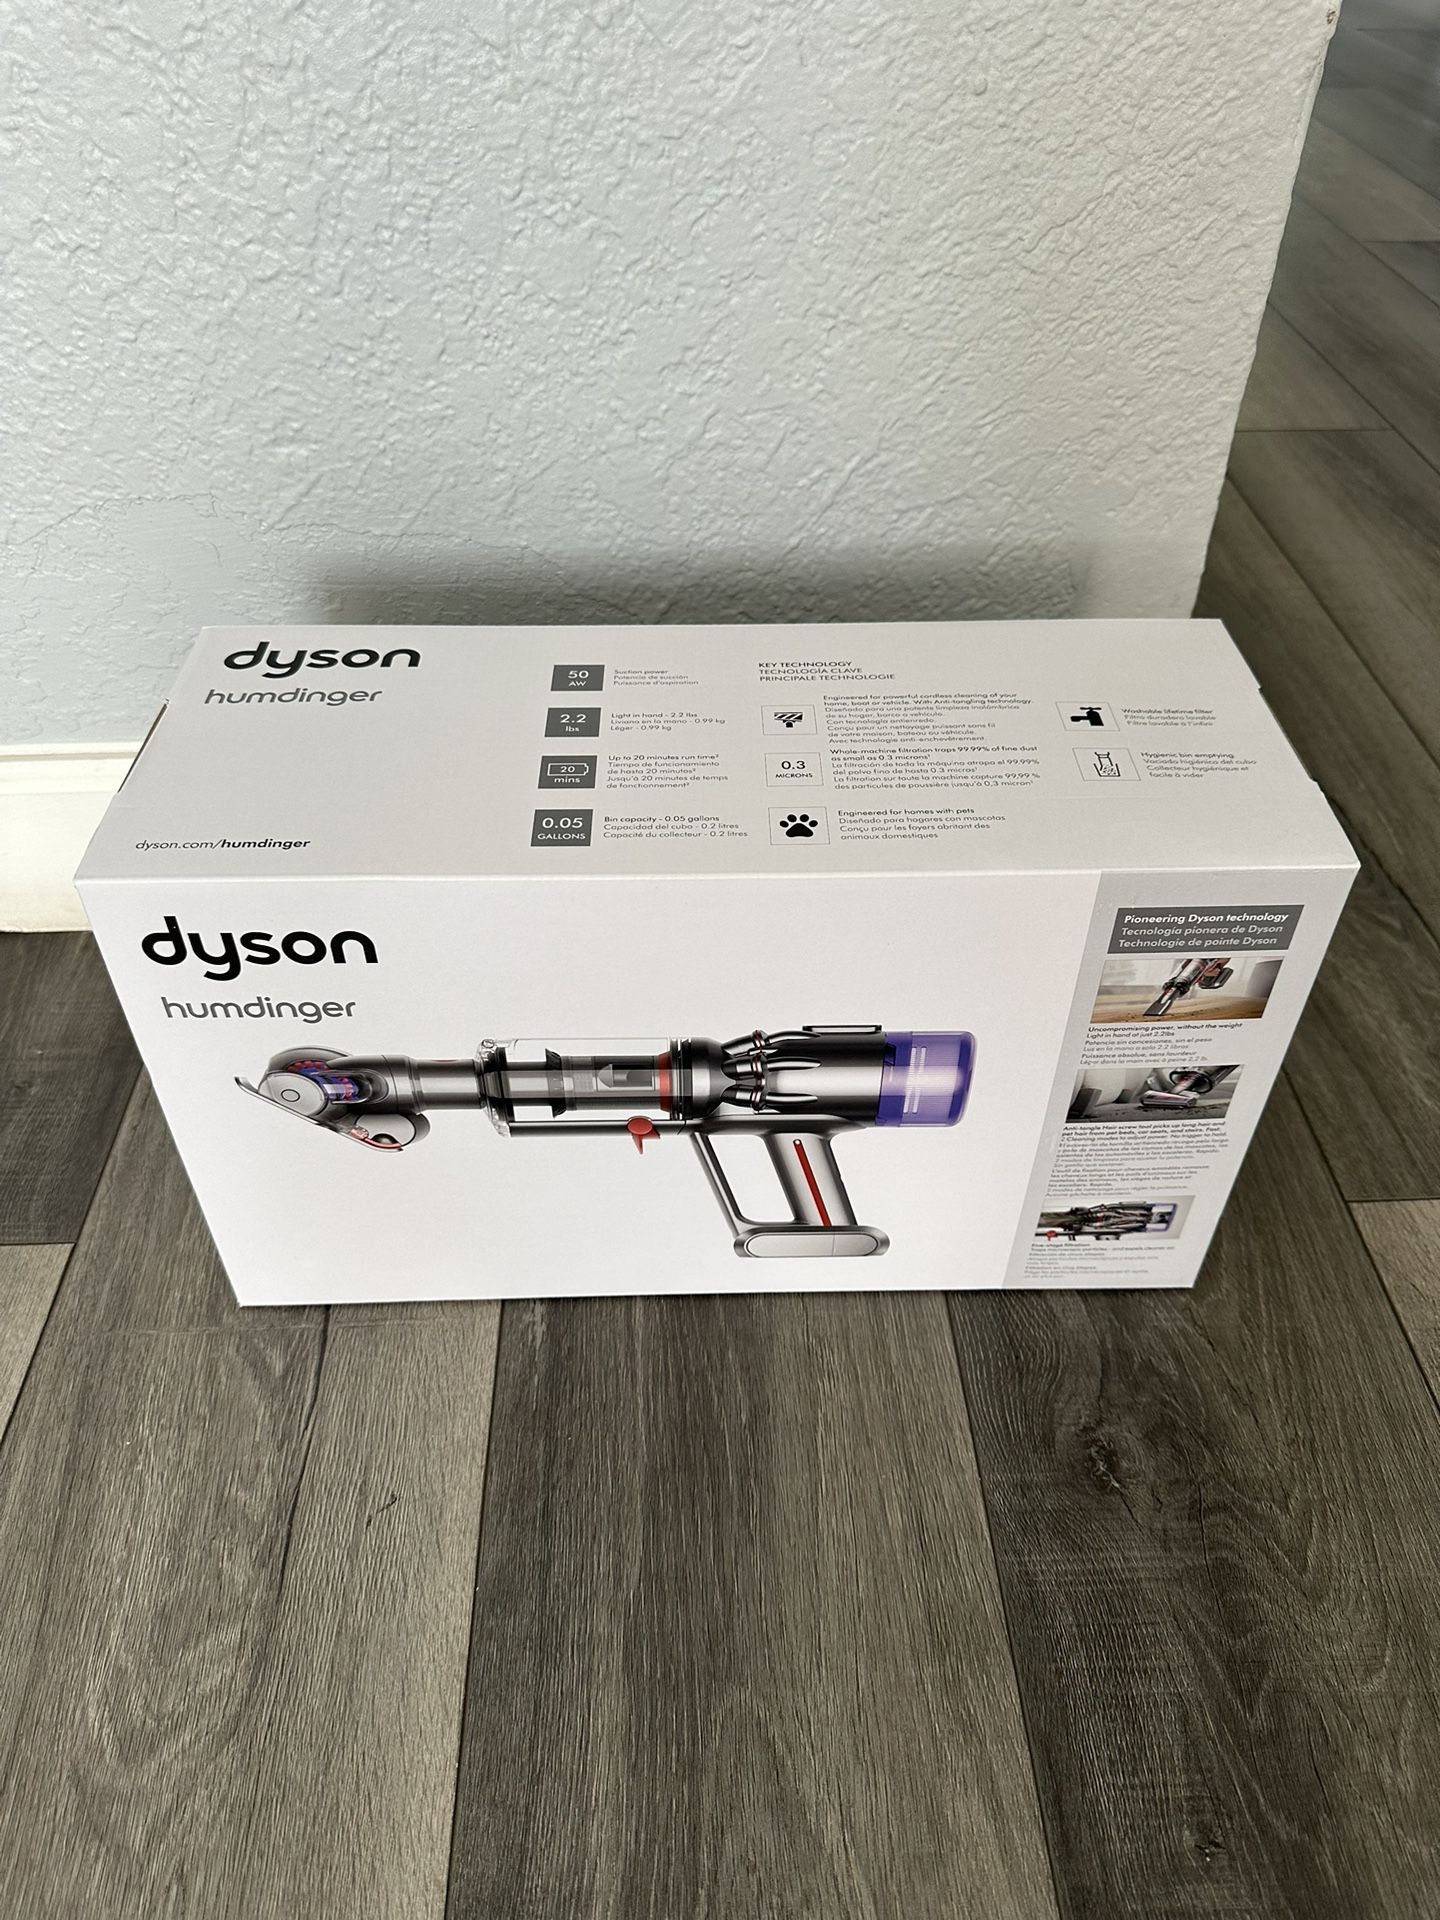 Dyson humdinger Handheld Vacuum 